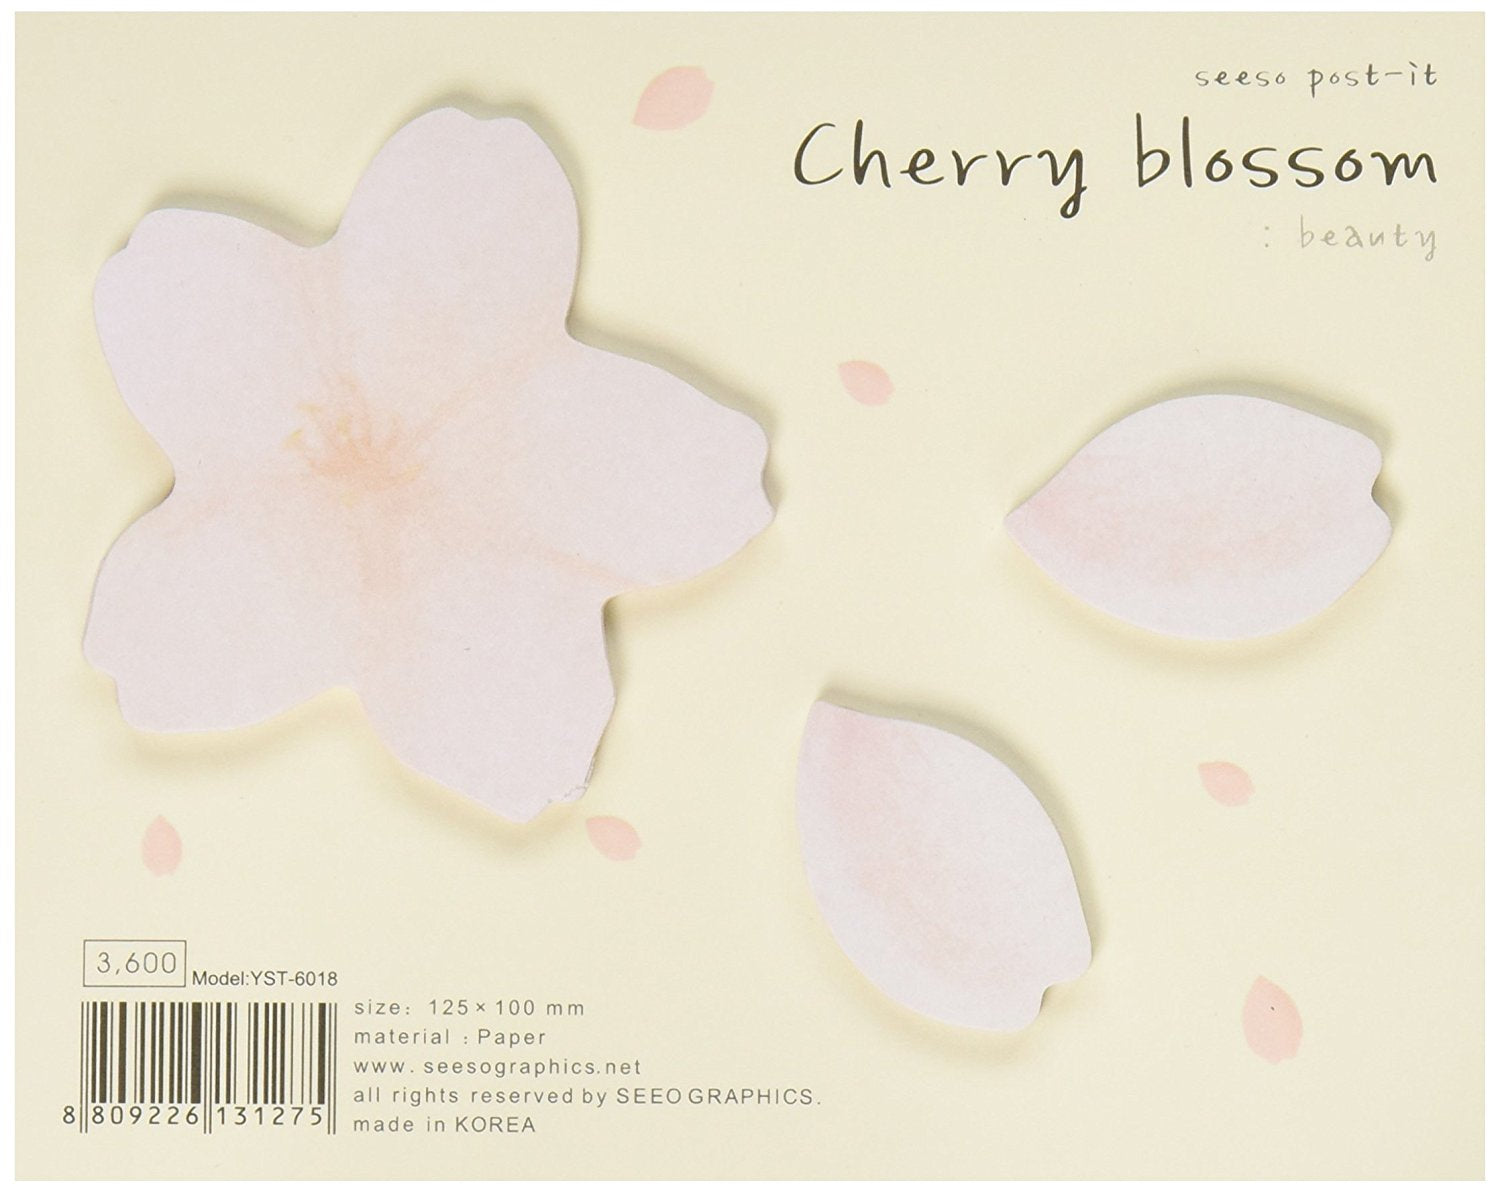 Cherry Blossom Sticky Notes